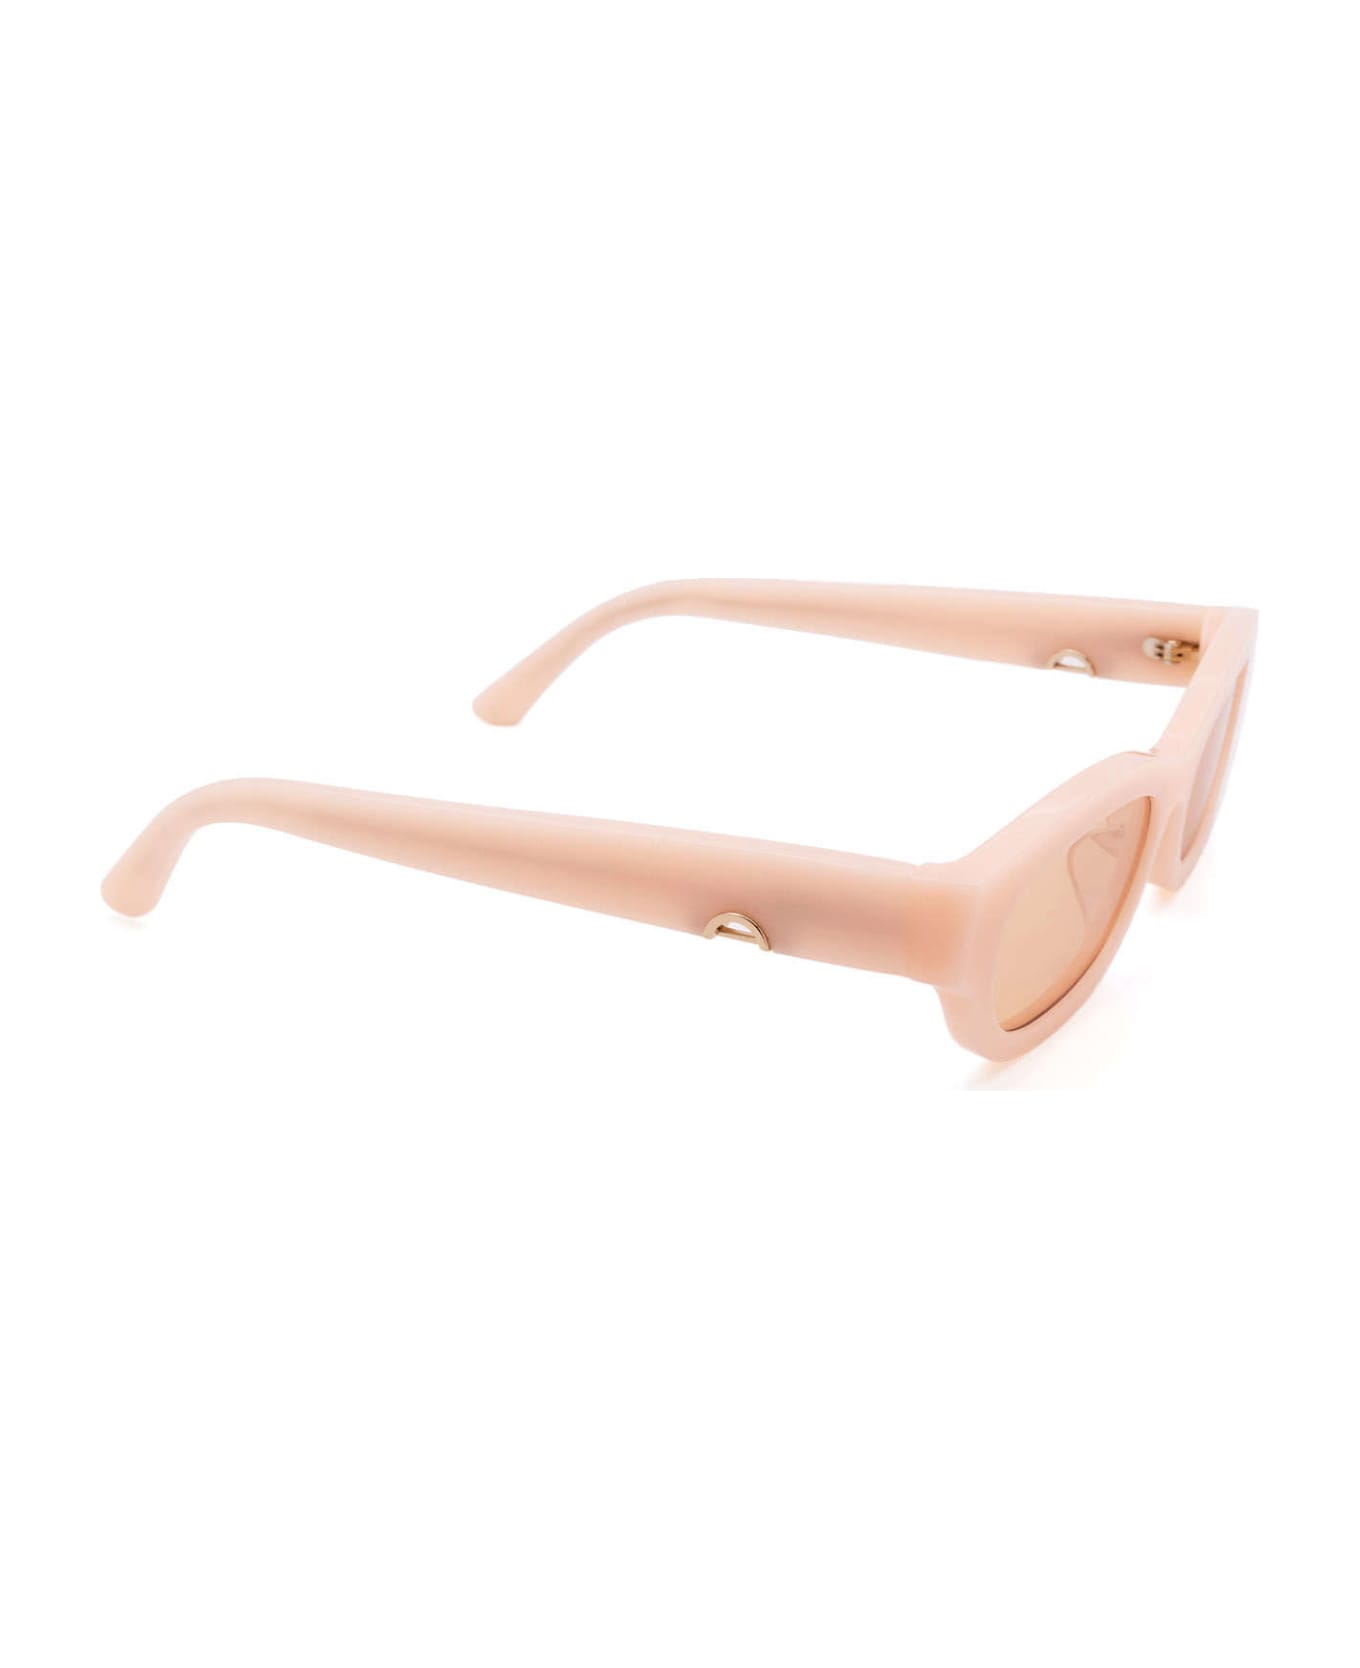 Huma Tojo Pink Sunglasses - Pink サングラス